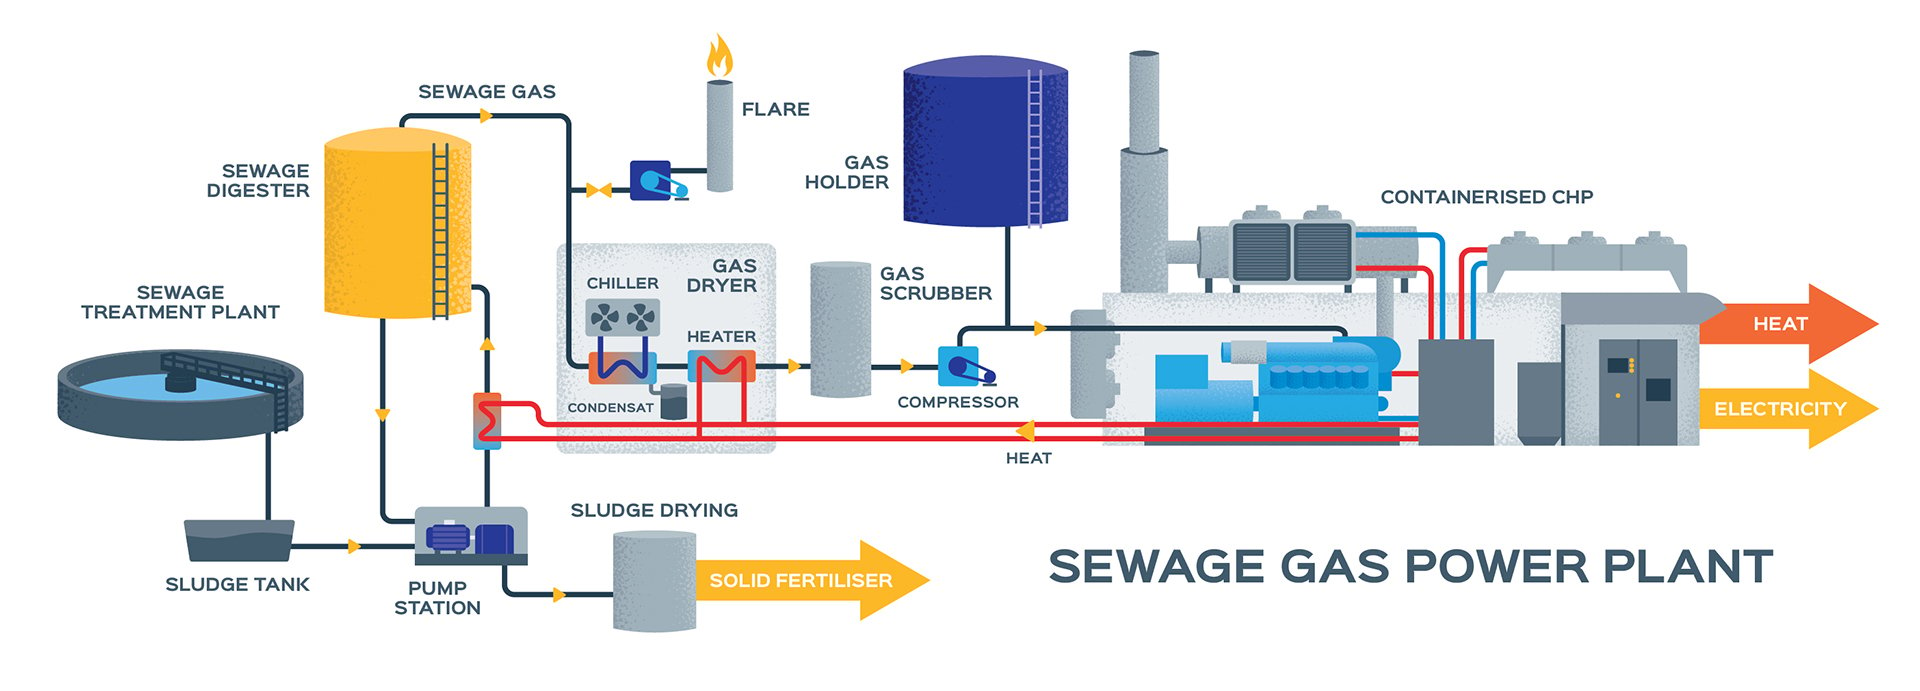 Sewage-Gas-Power-Plant